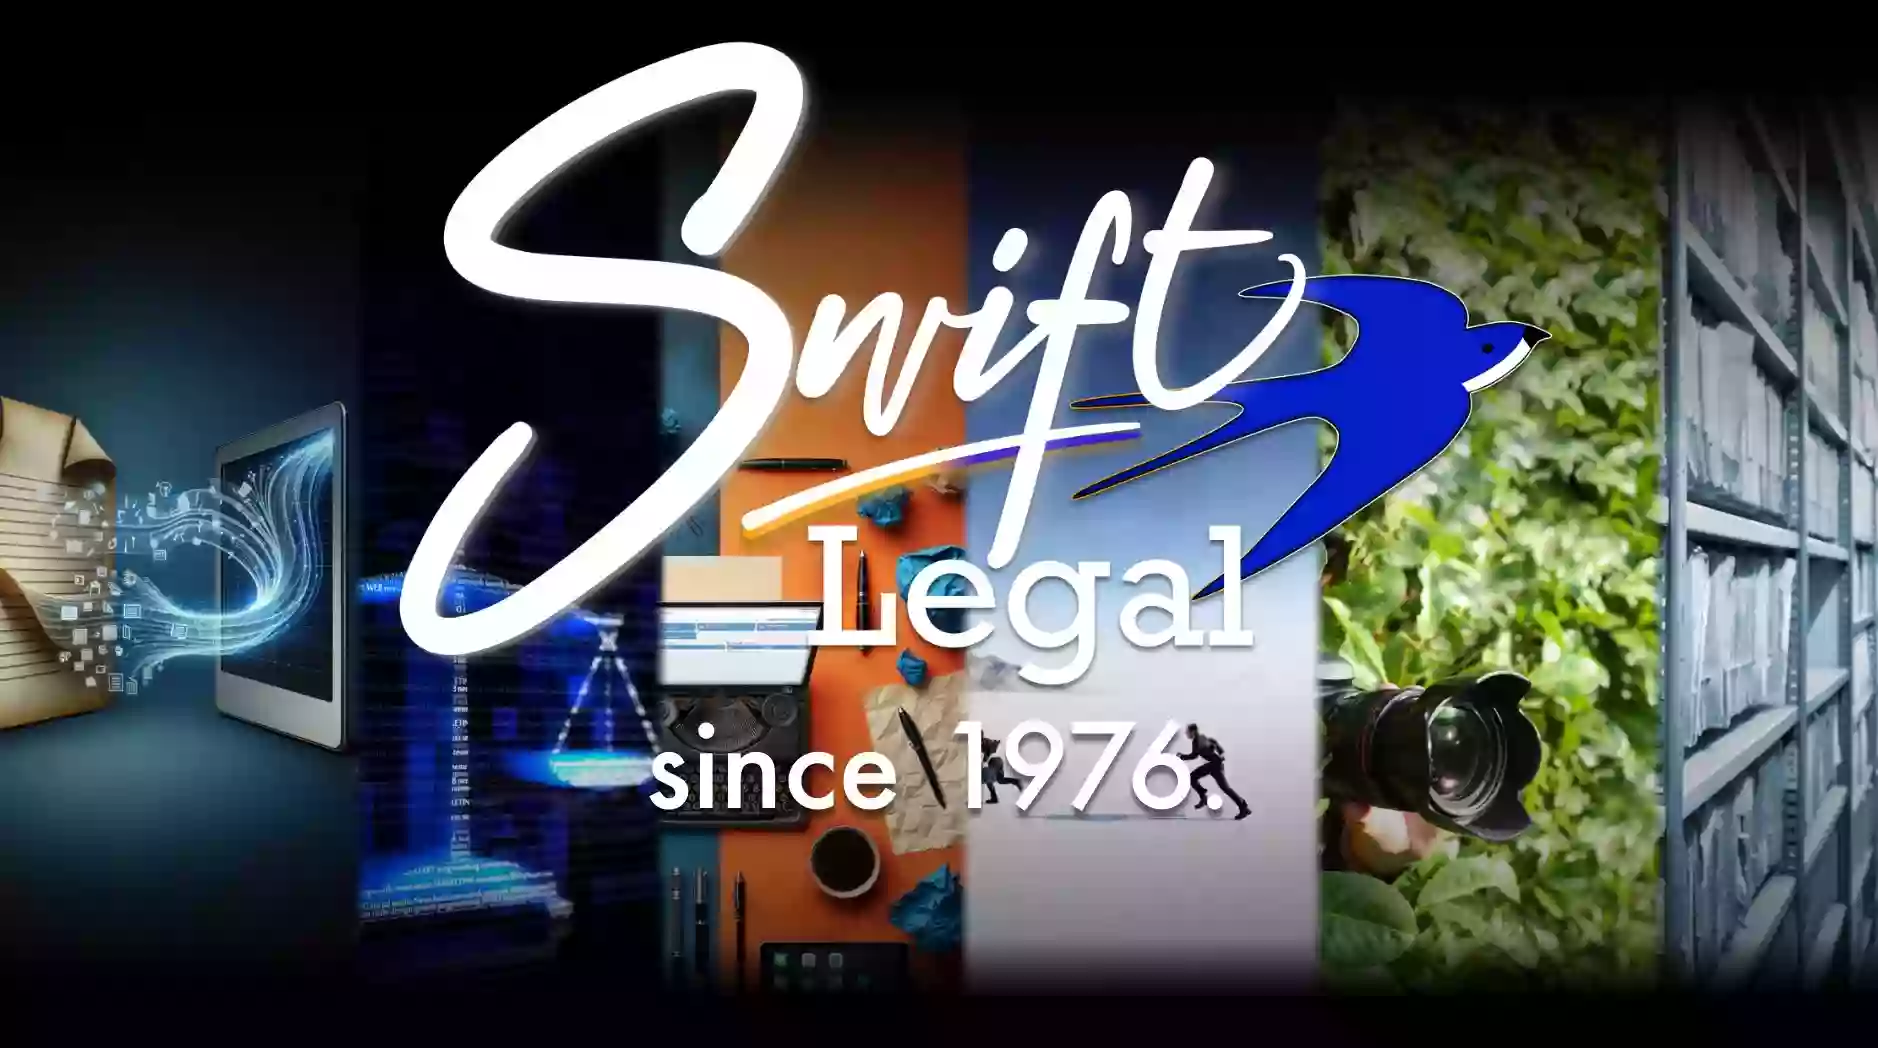 Swift Legal